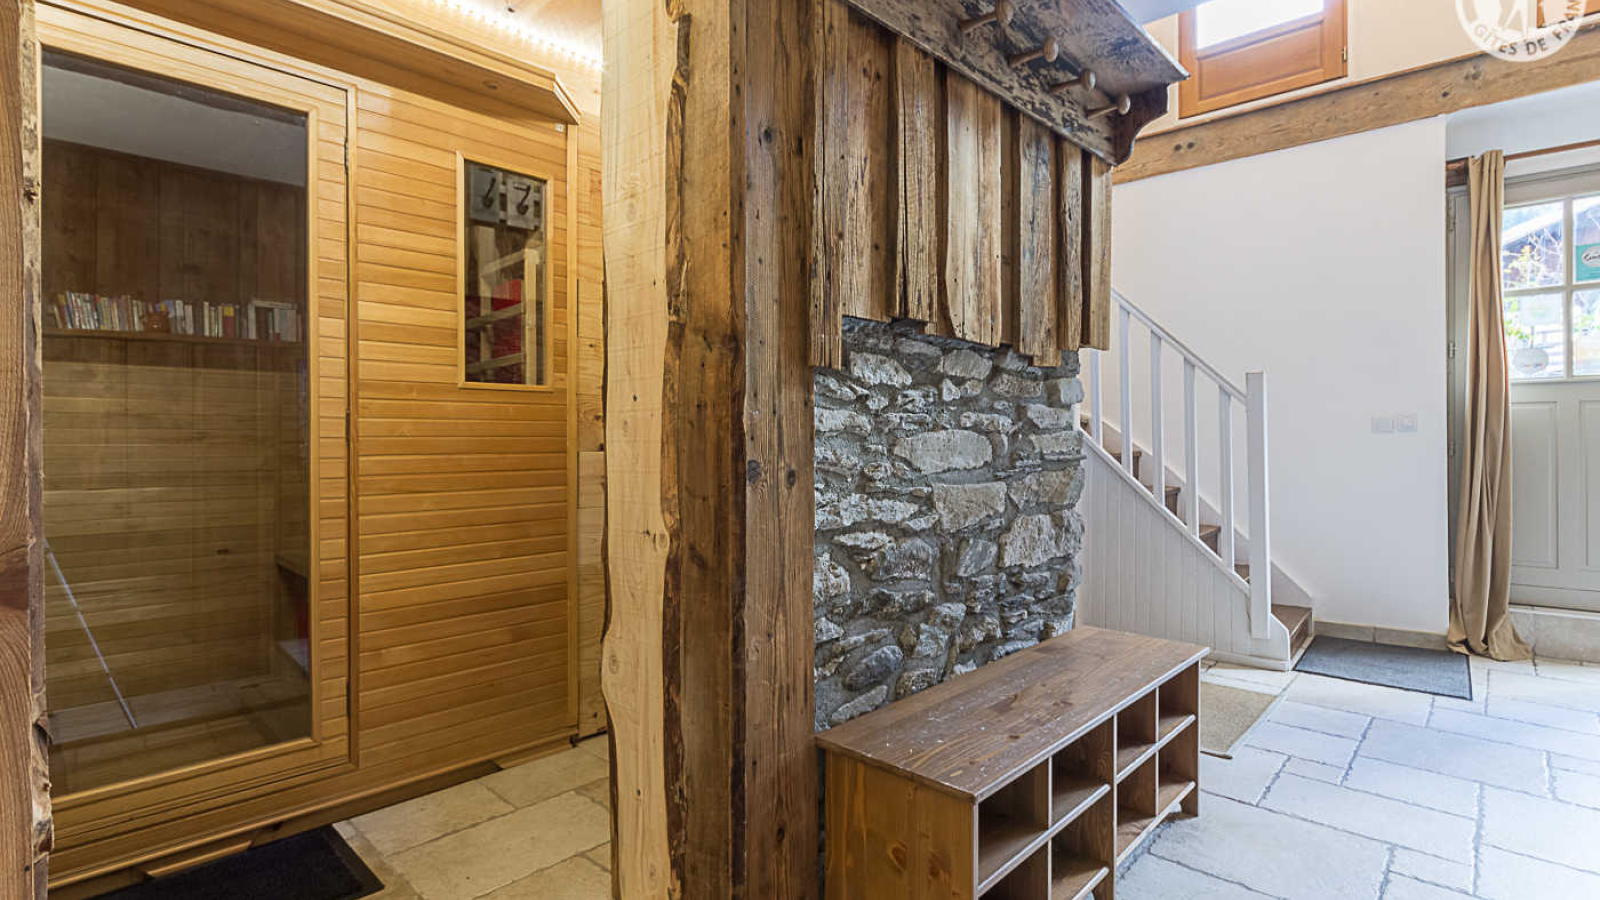 Hall d'entrée avec le sauna en libre accès